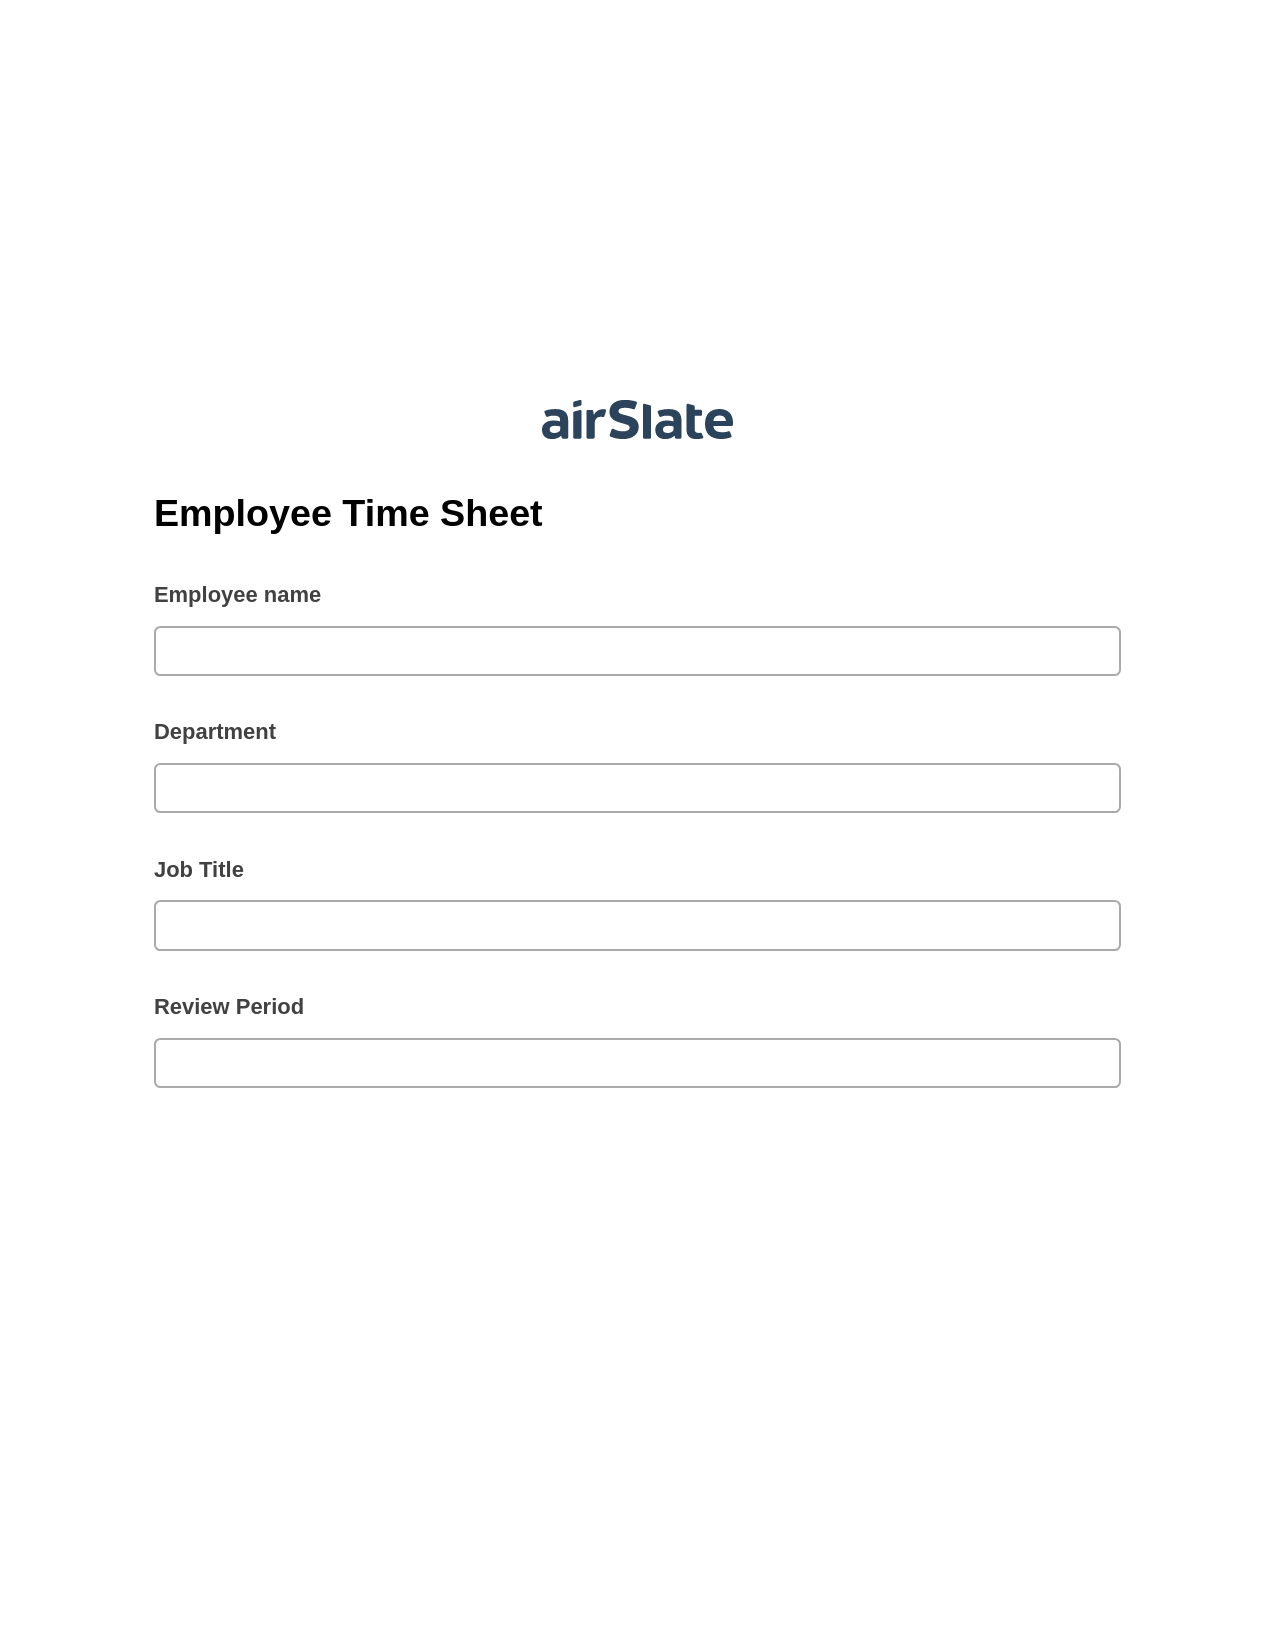 Multirole Employee Time Sheet Pre-fill from Smartsheet Bot, Remove Slate Bot, Archive to Dropbox Bot